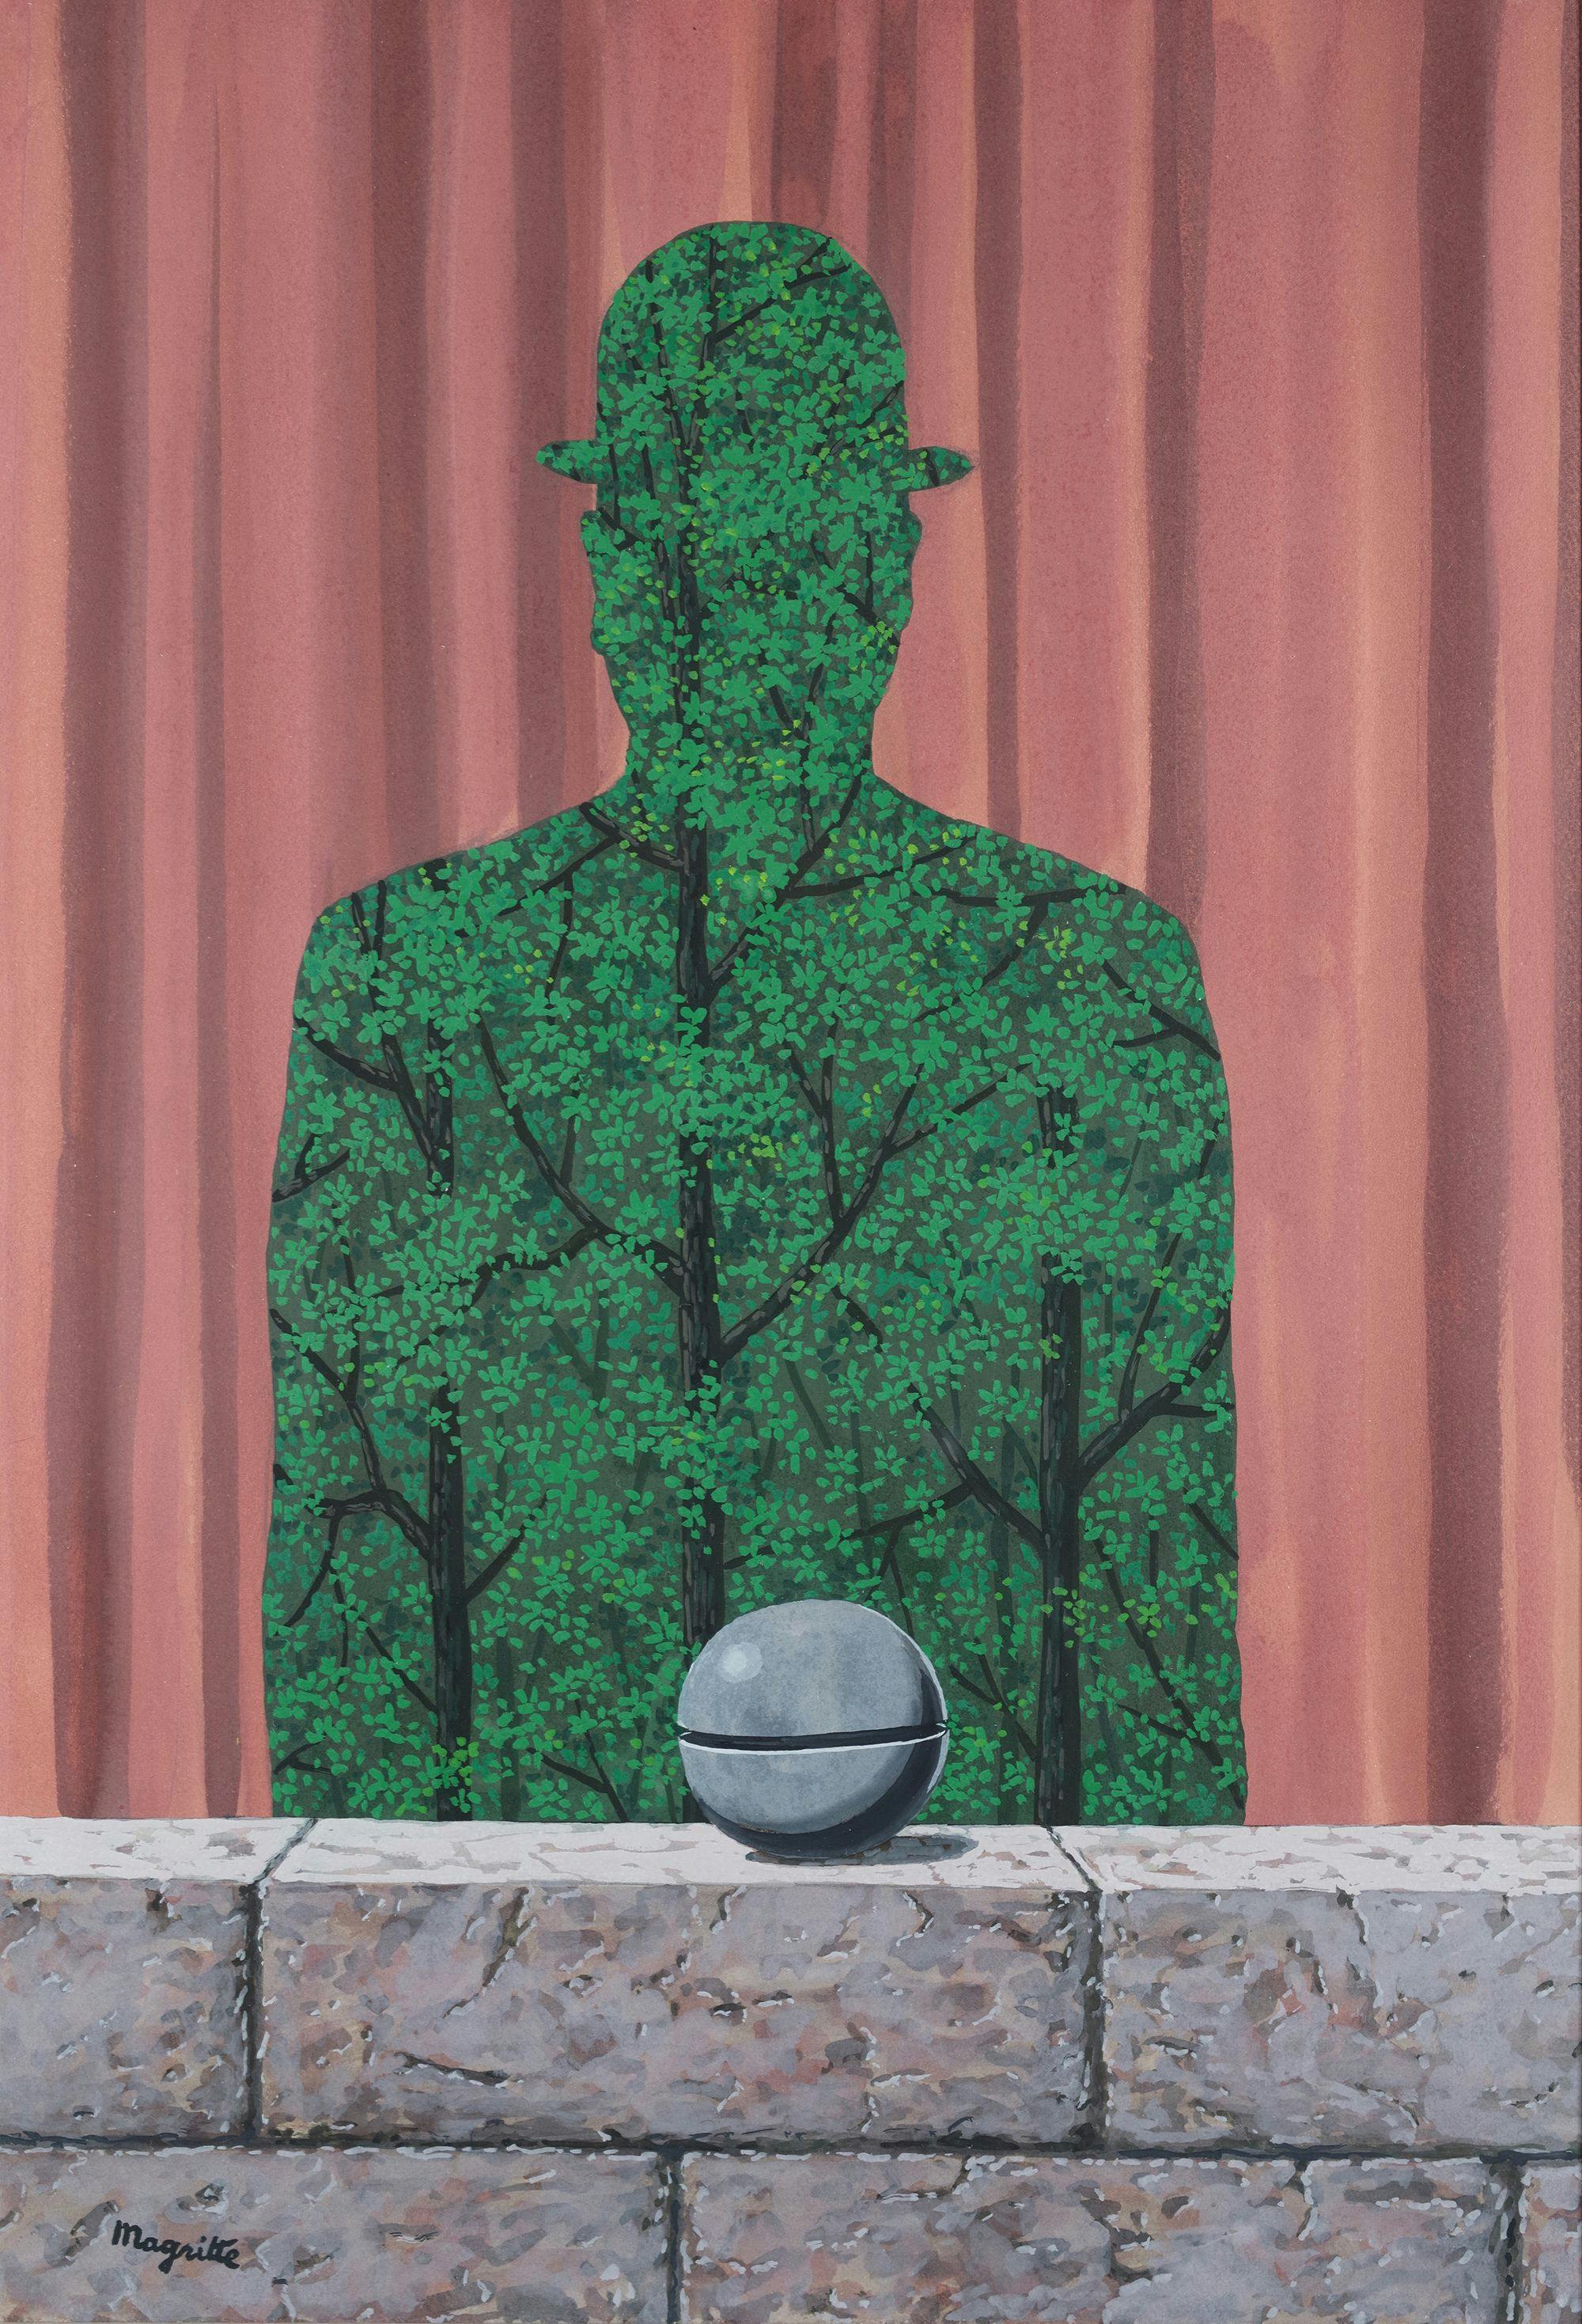 René Magritte, L’homme et la forêt, ca 1965 (Private Collection) © René Magritte, Bildupphovsrätt, Stockholm 2022